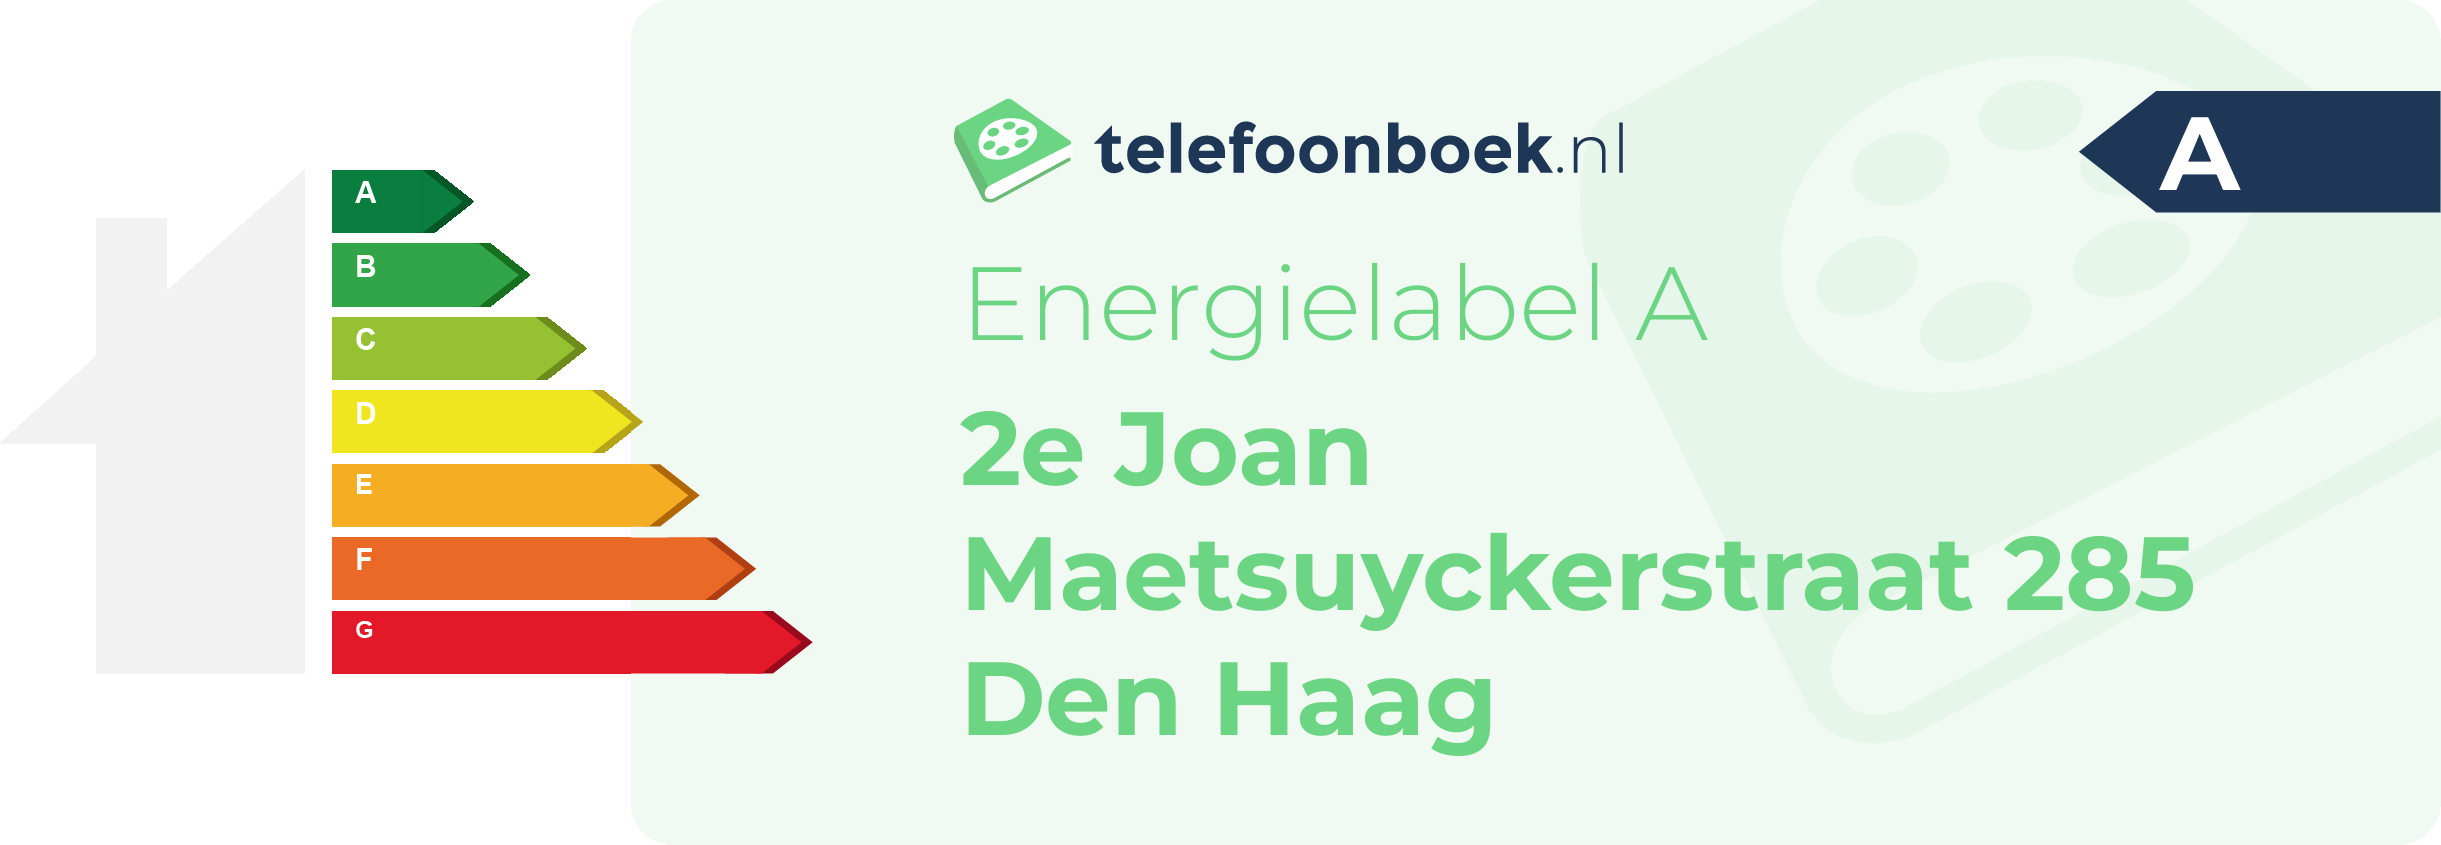 Energielabel 2e Joan Maetsuyckerstraat 285 Den Haag